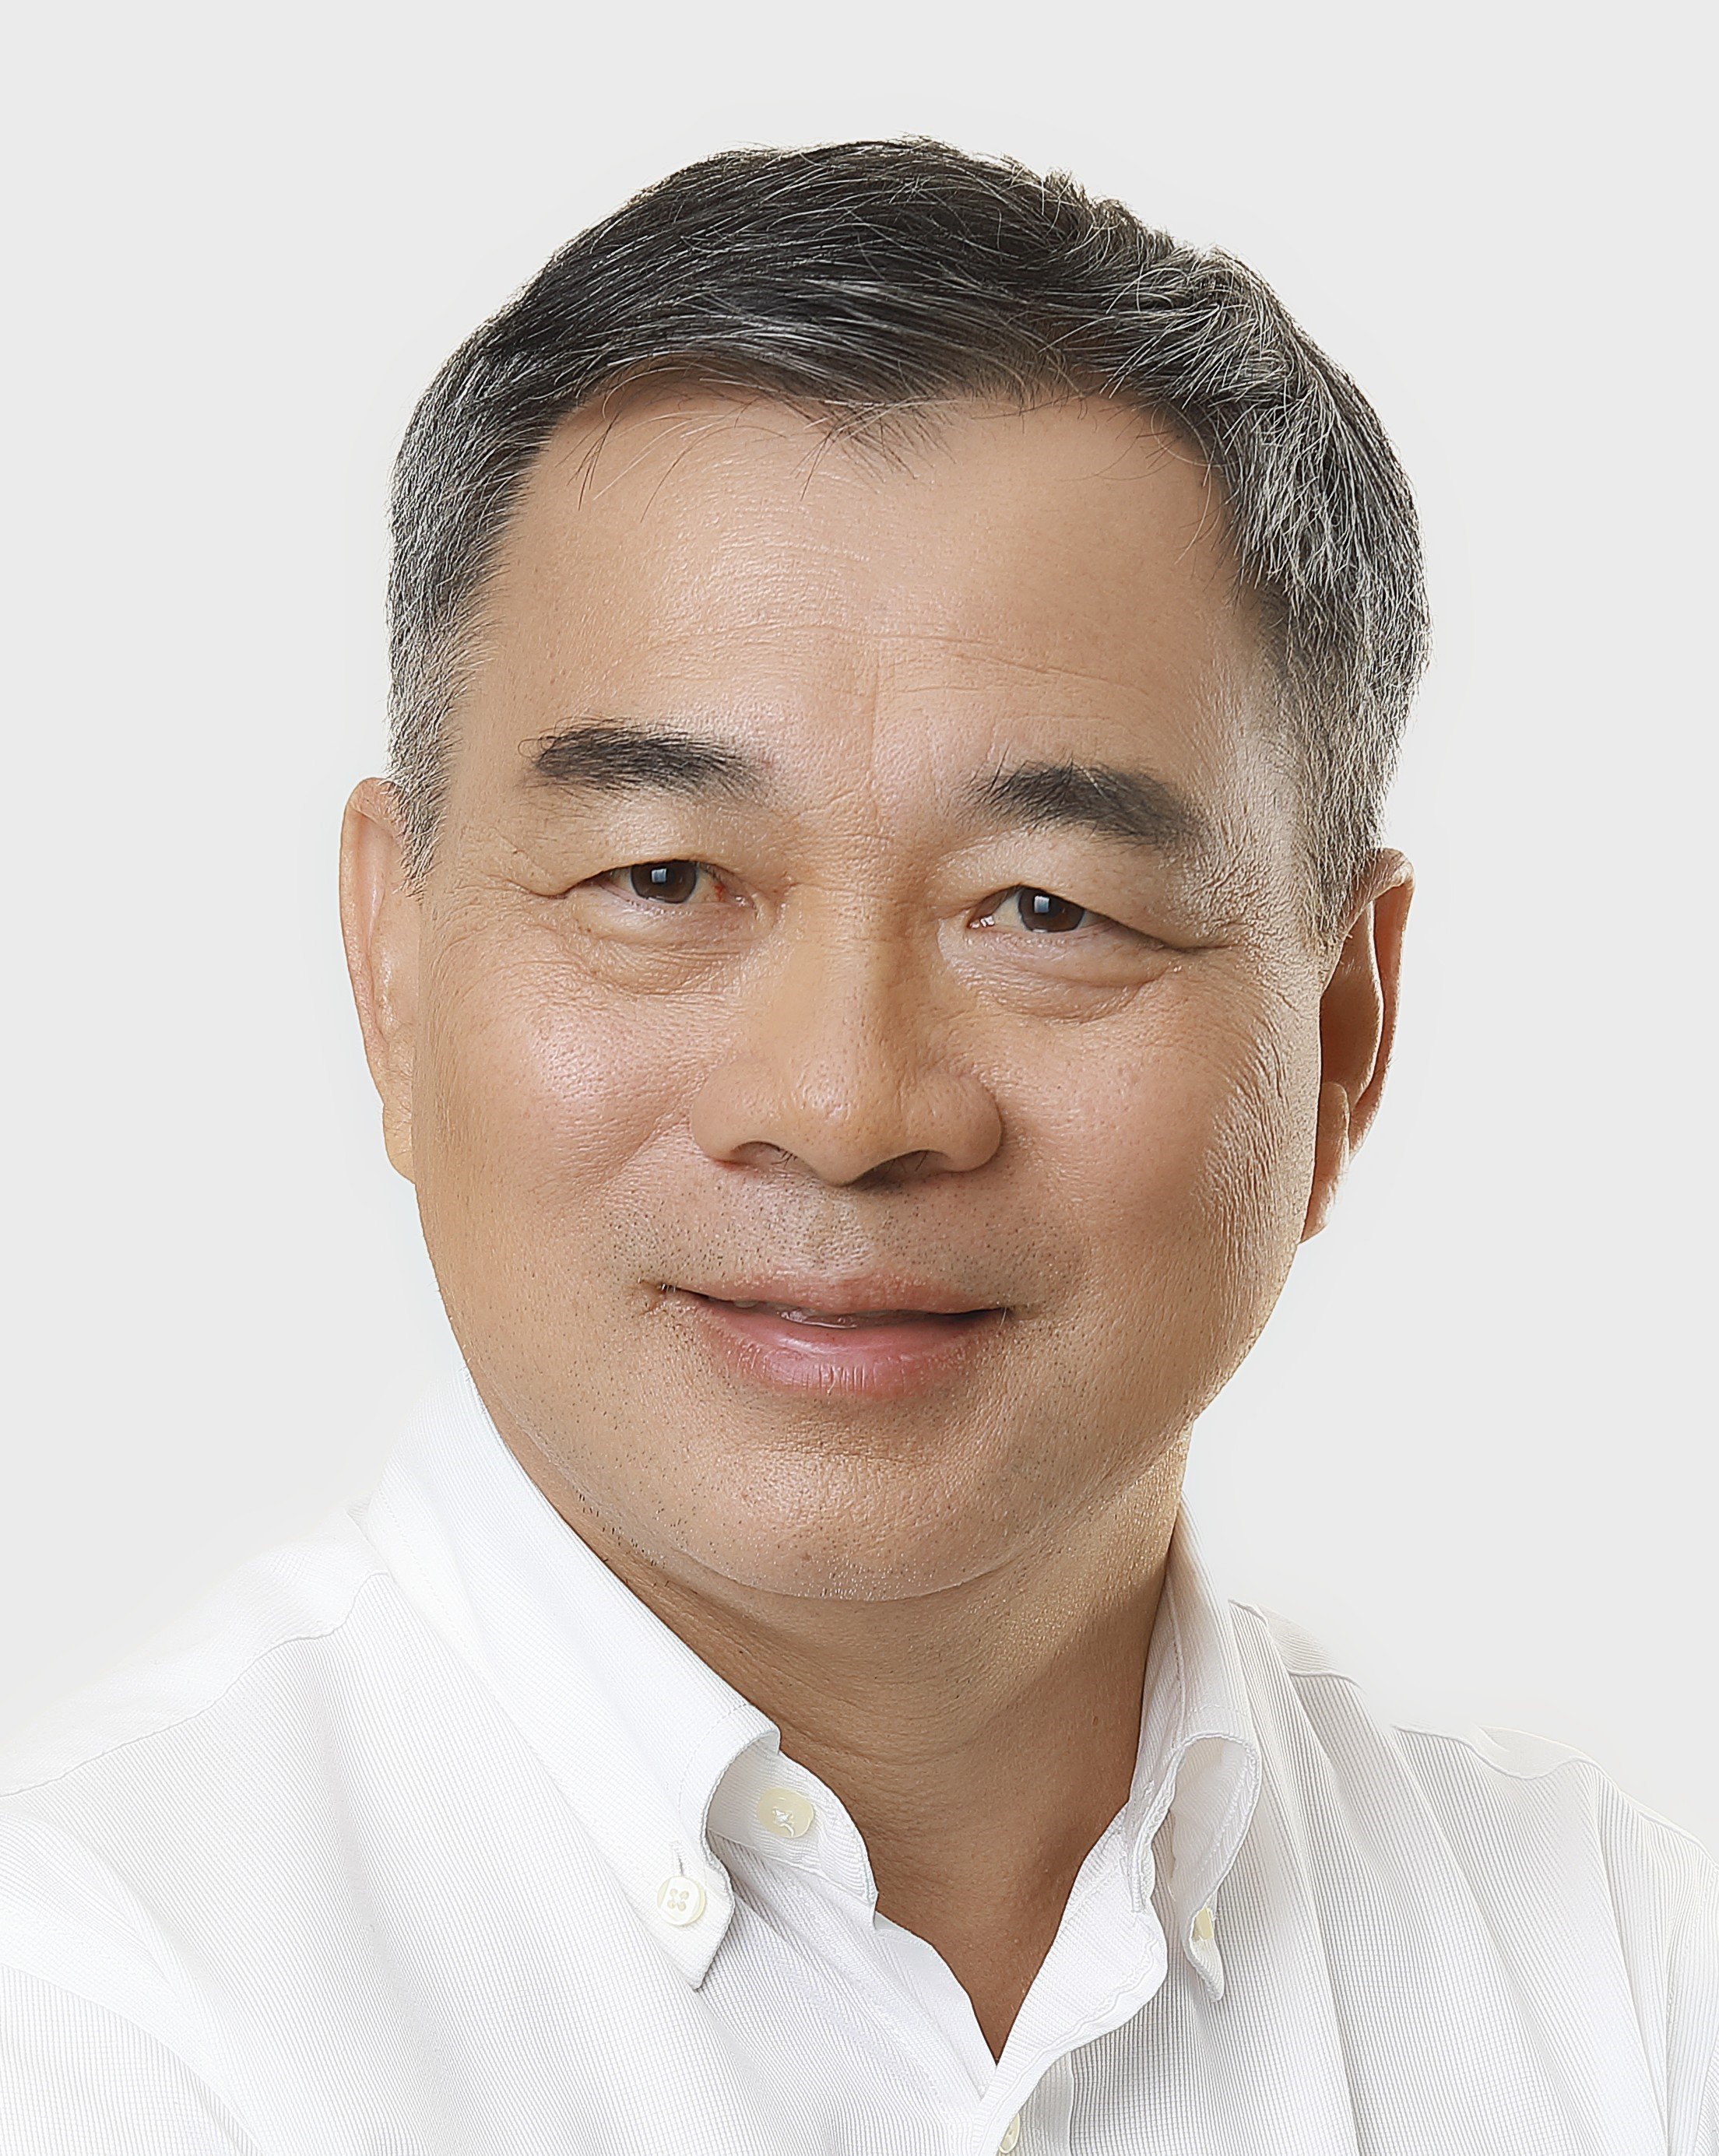 Mr Richard Lim